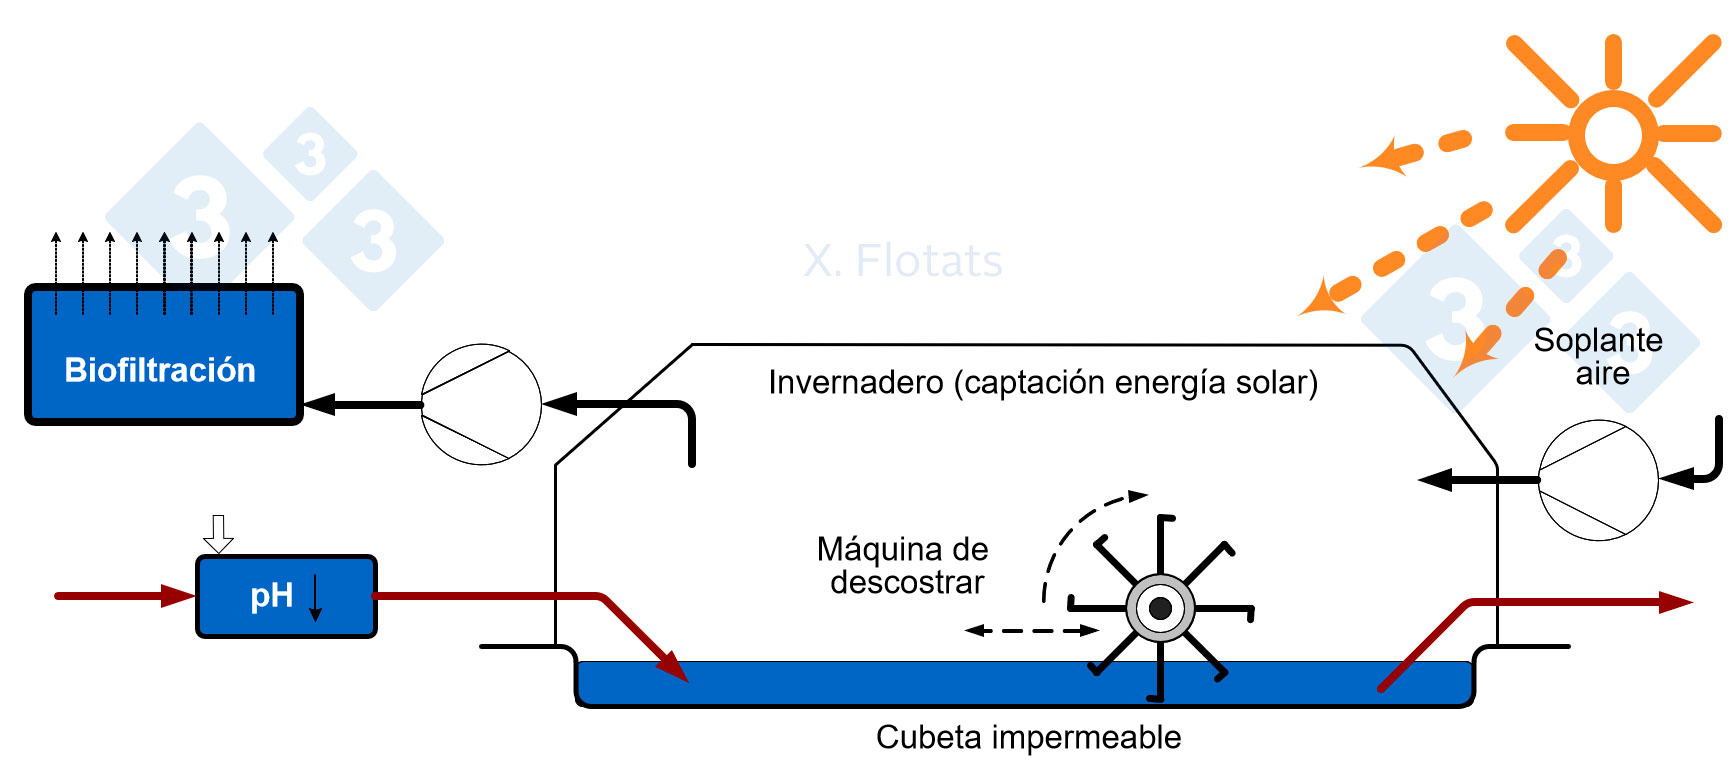 <p>Figura 1. Esquema de una instalaci&oacute;n de secado solar de purines o su fracci&oacute;n s&oacute;lida.</p>
